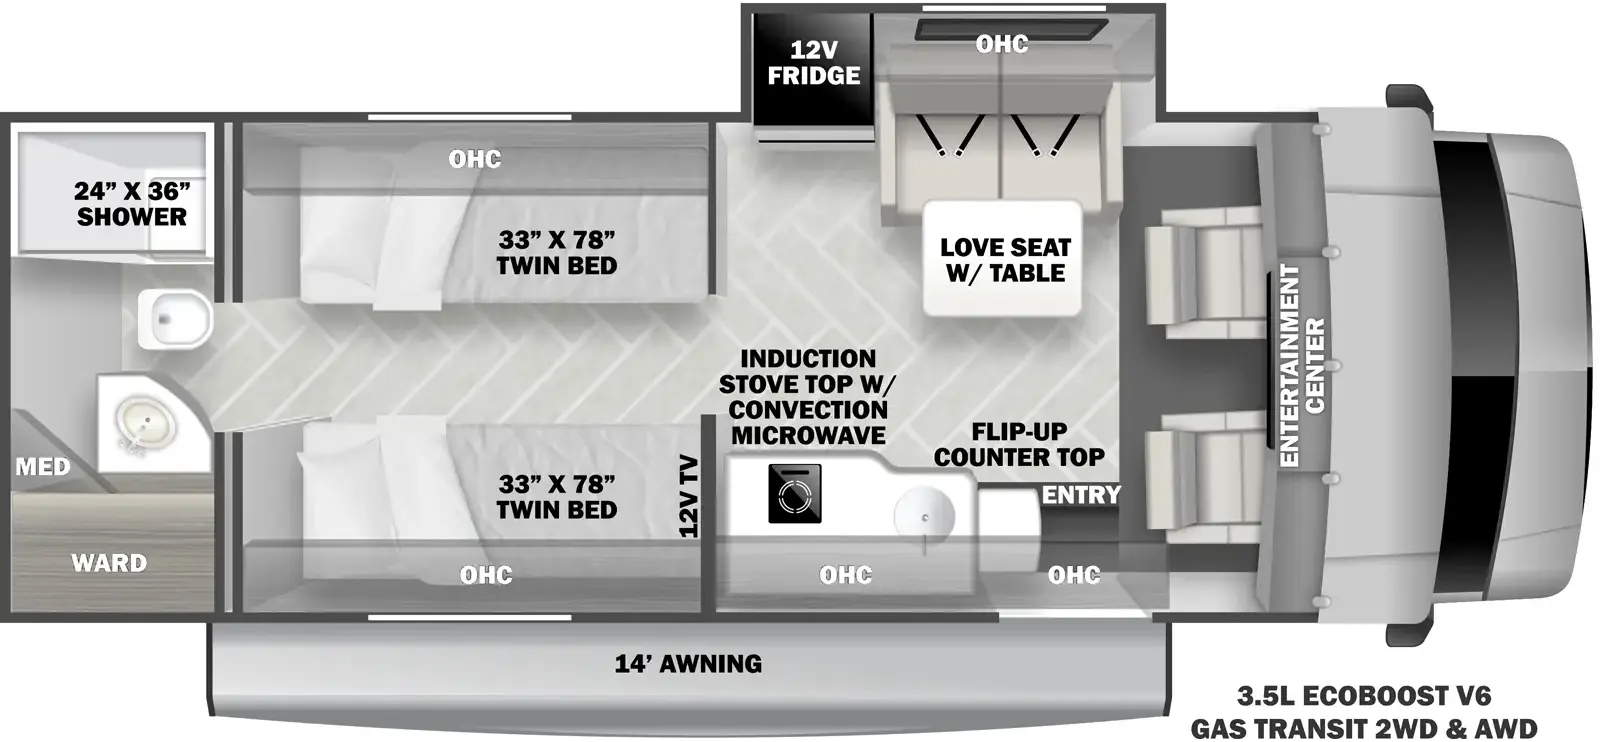 TS2371 Floorplan Image